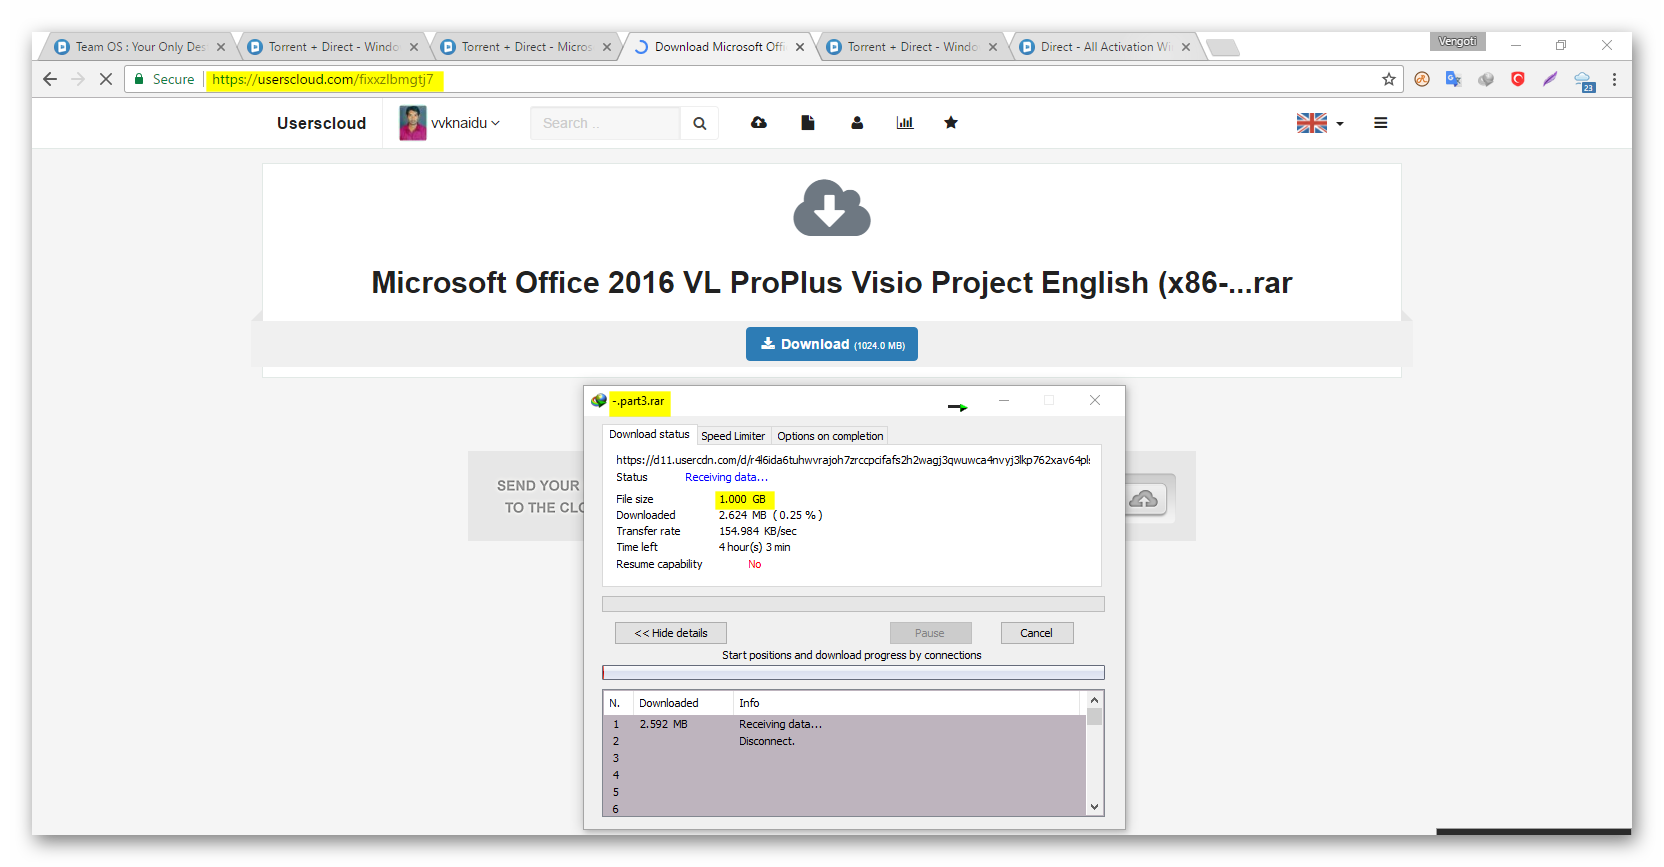 Microsoft Office 2016 15.38.0 VL